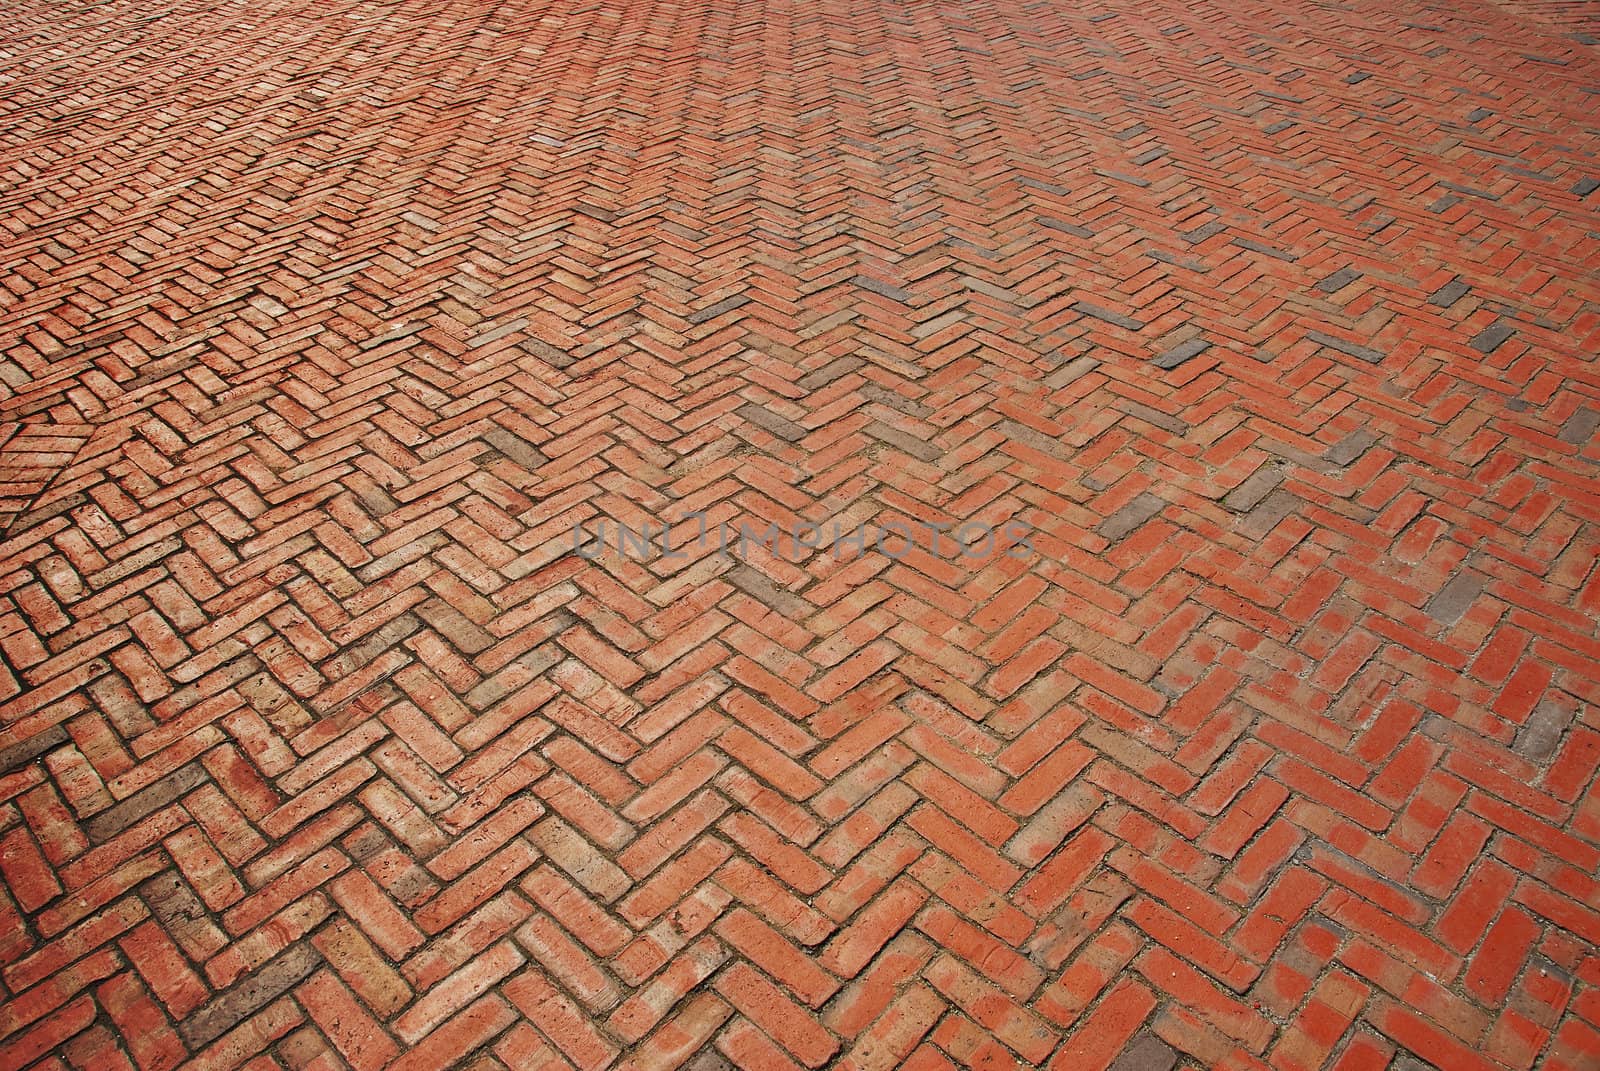 Brick walkway by f/2sumicron